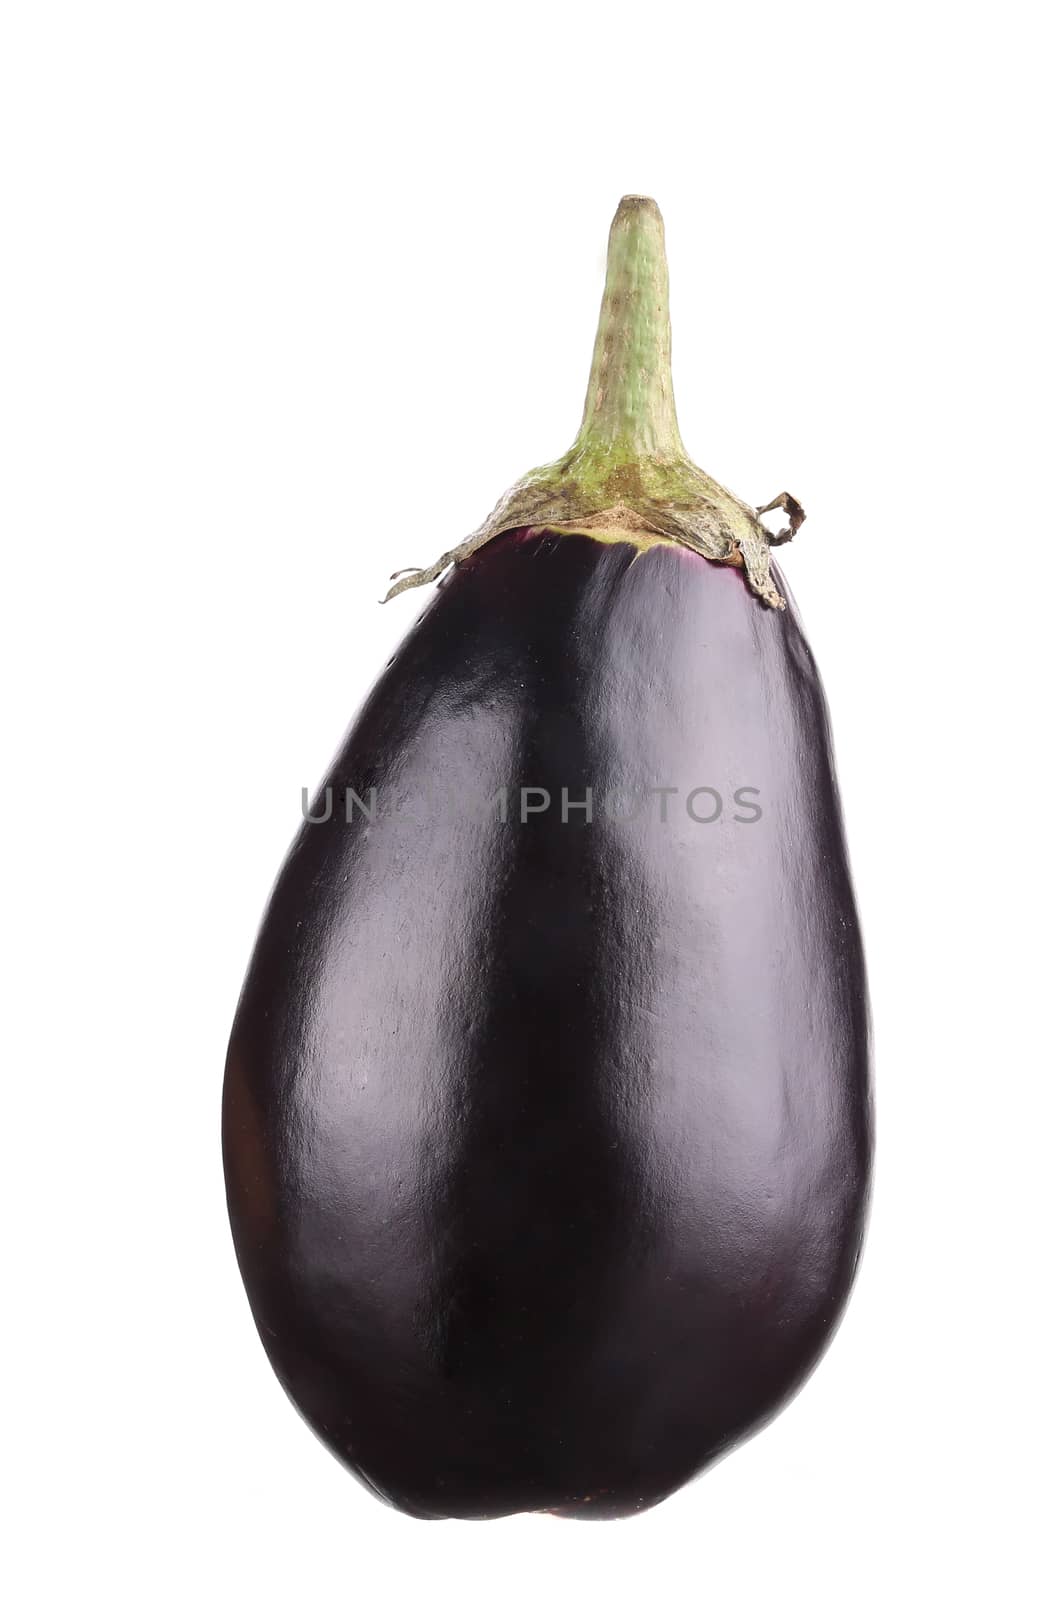 Black eggplant. Isolated on a white background.